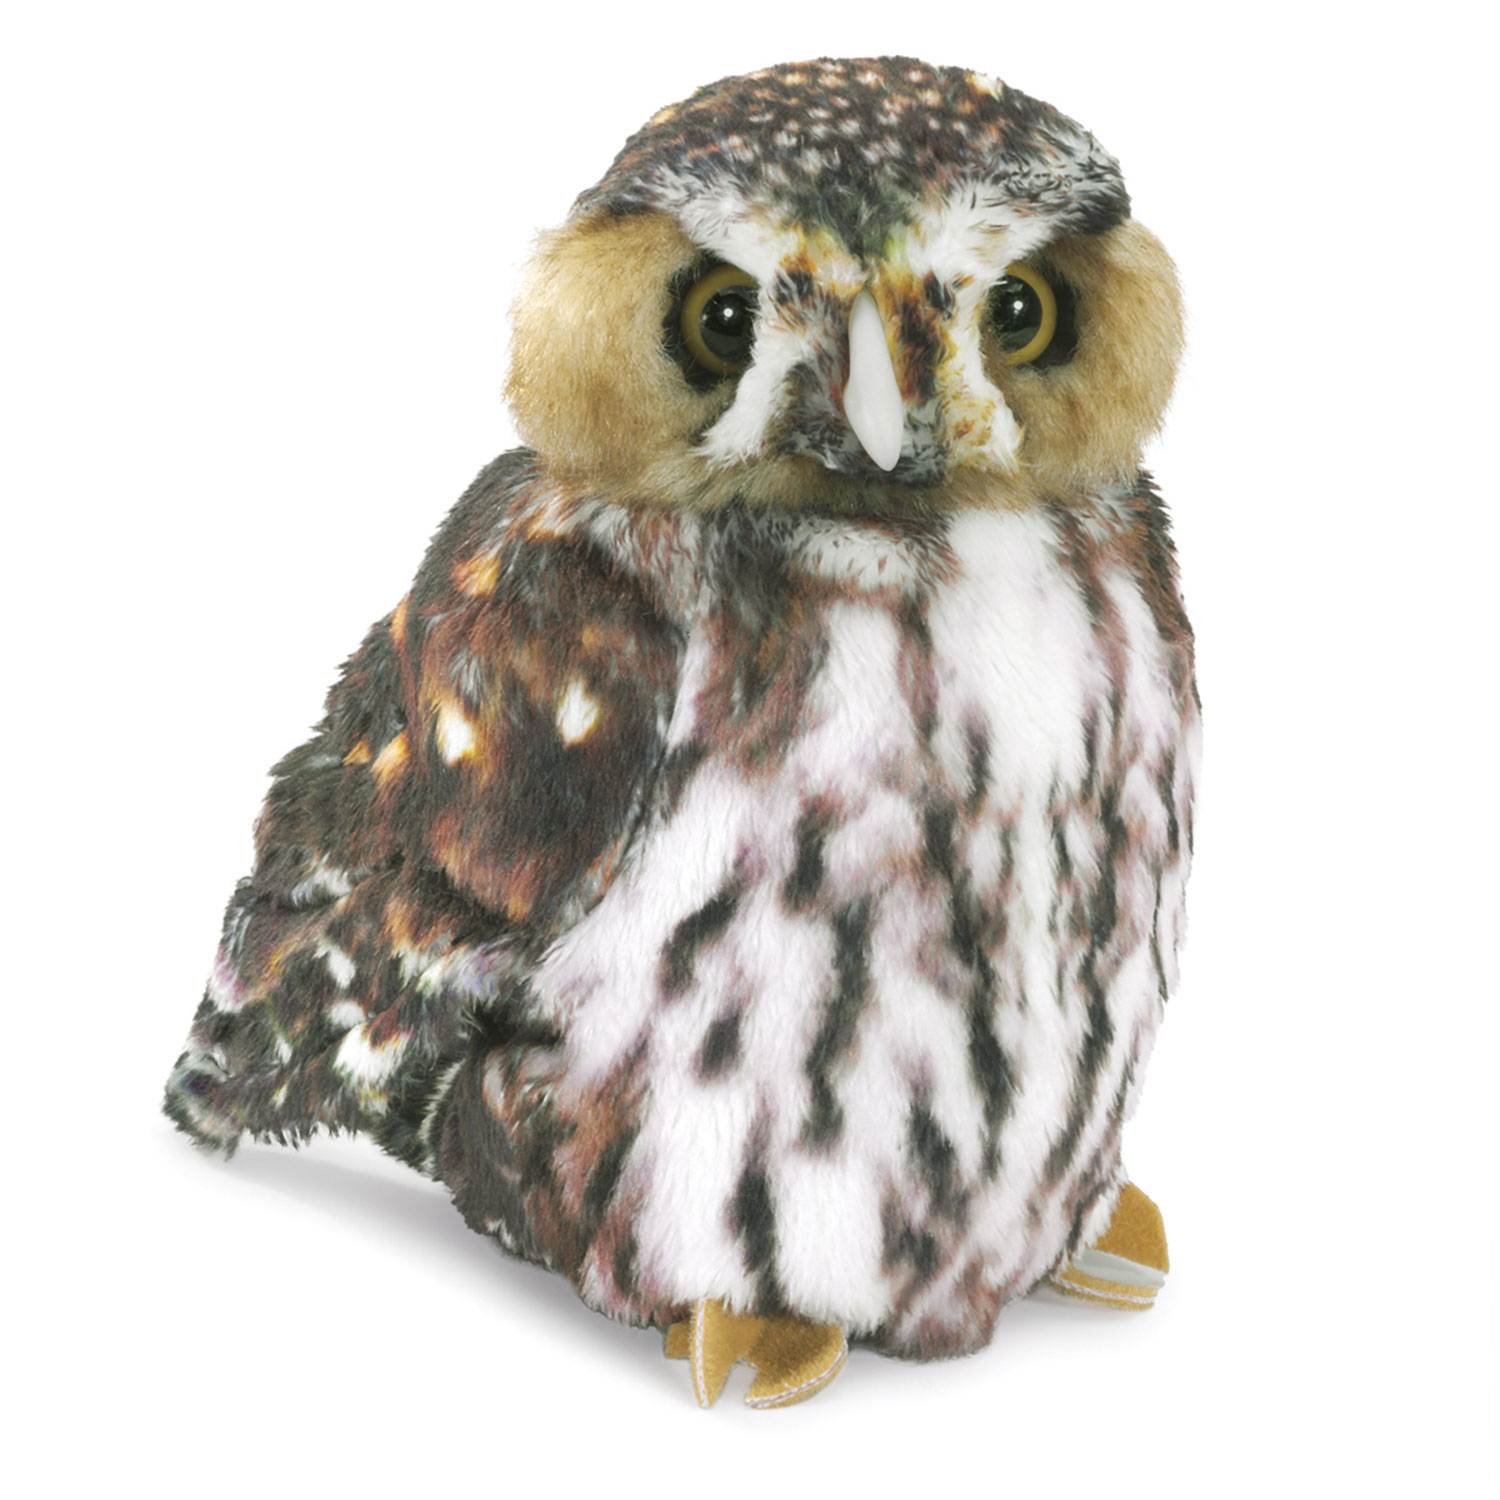 Pygmy Owl / Sperlingskauz